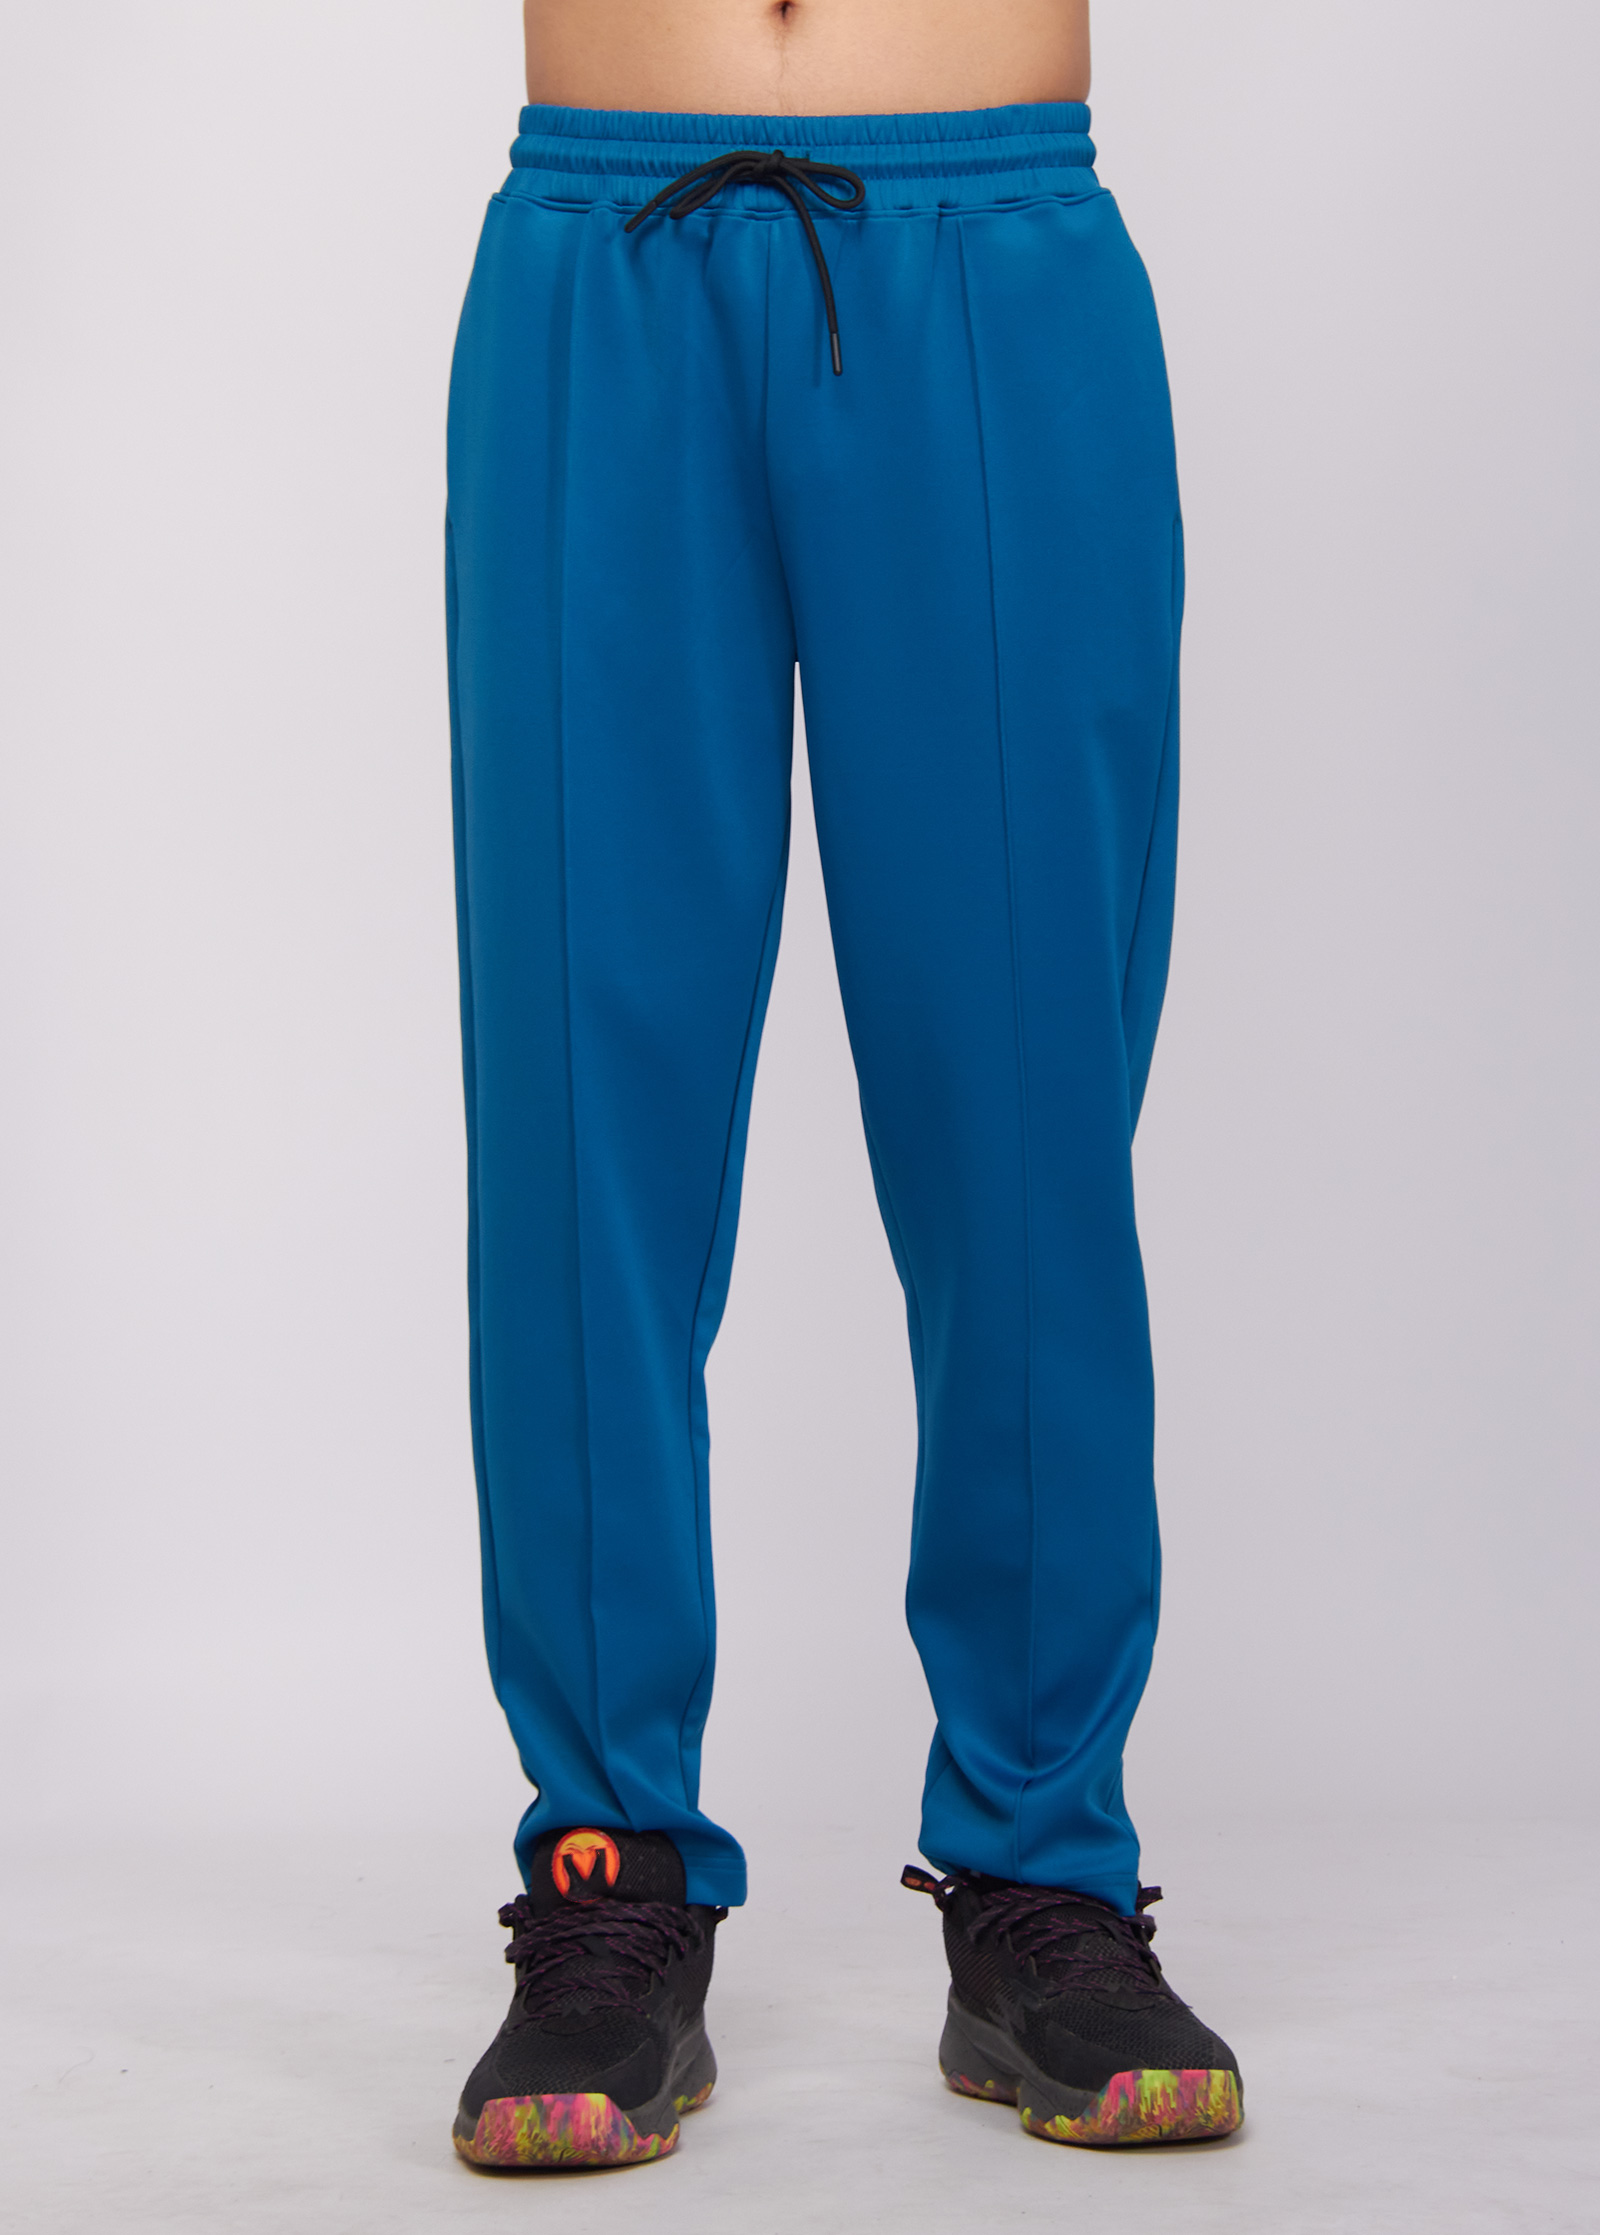 Custom Mens Casual Trousers Comfortable Fabric Sweatpants Gym Sports Jogger Pants